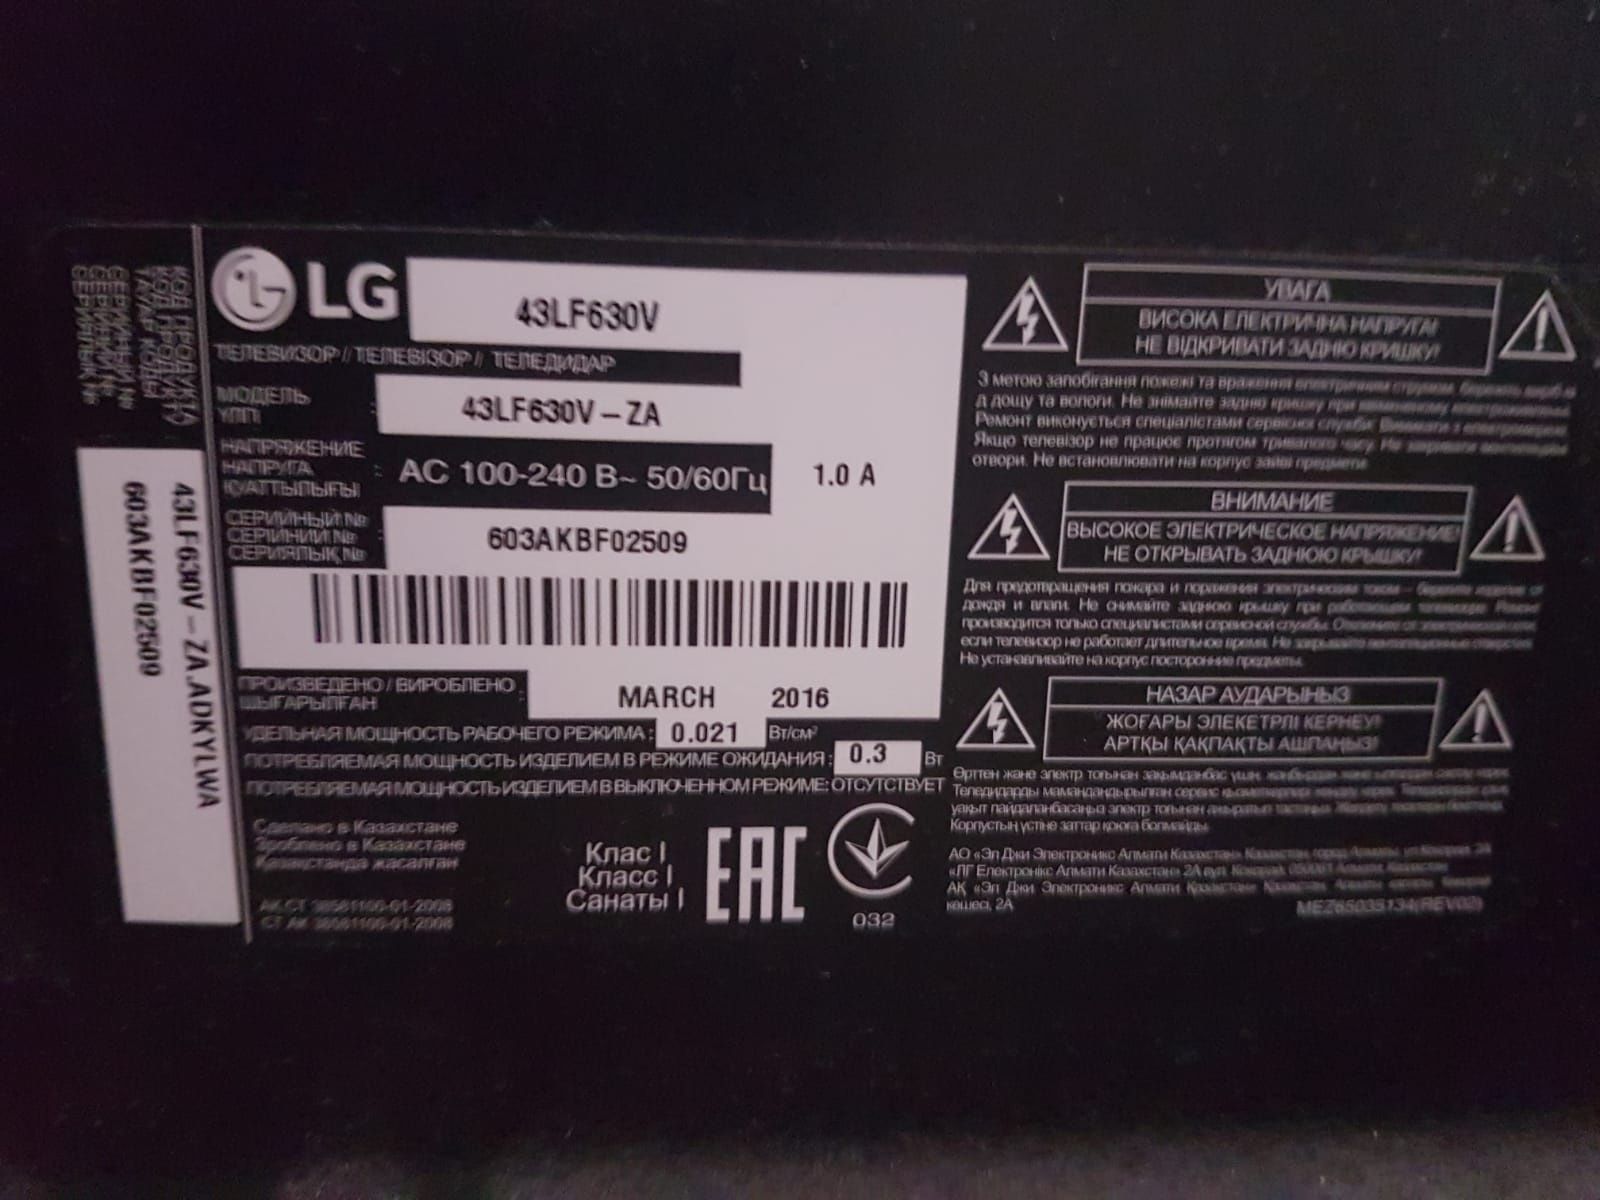 Телевизор LG-43LF630V-ZA